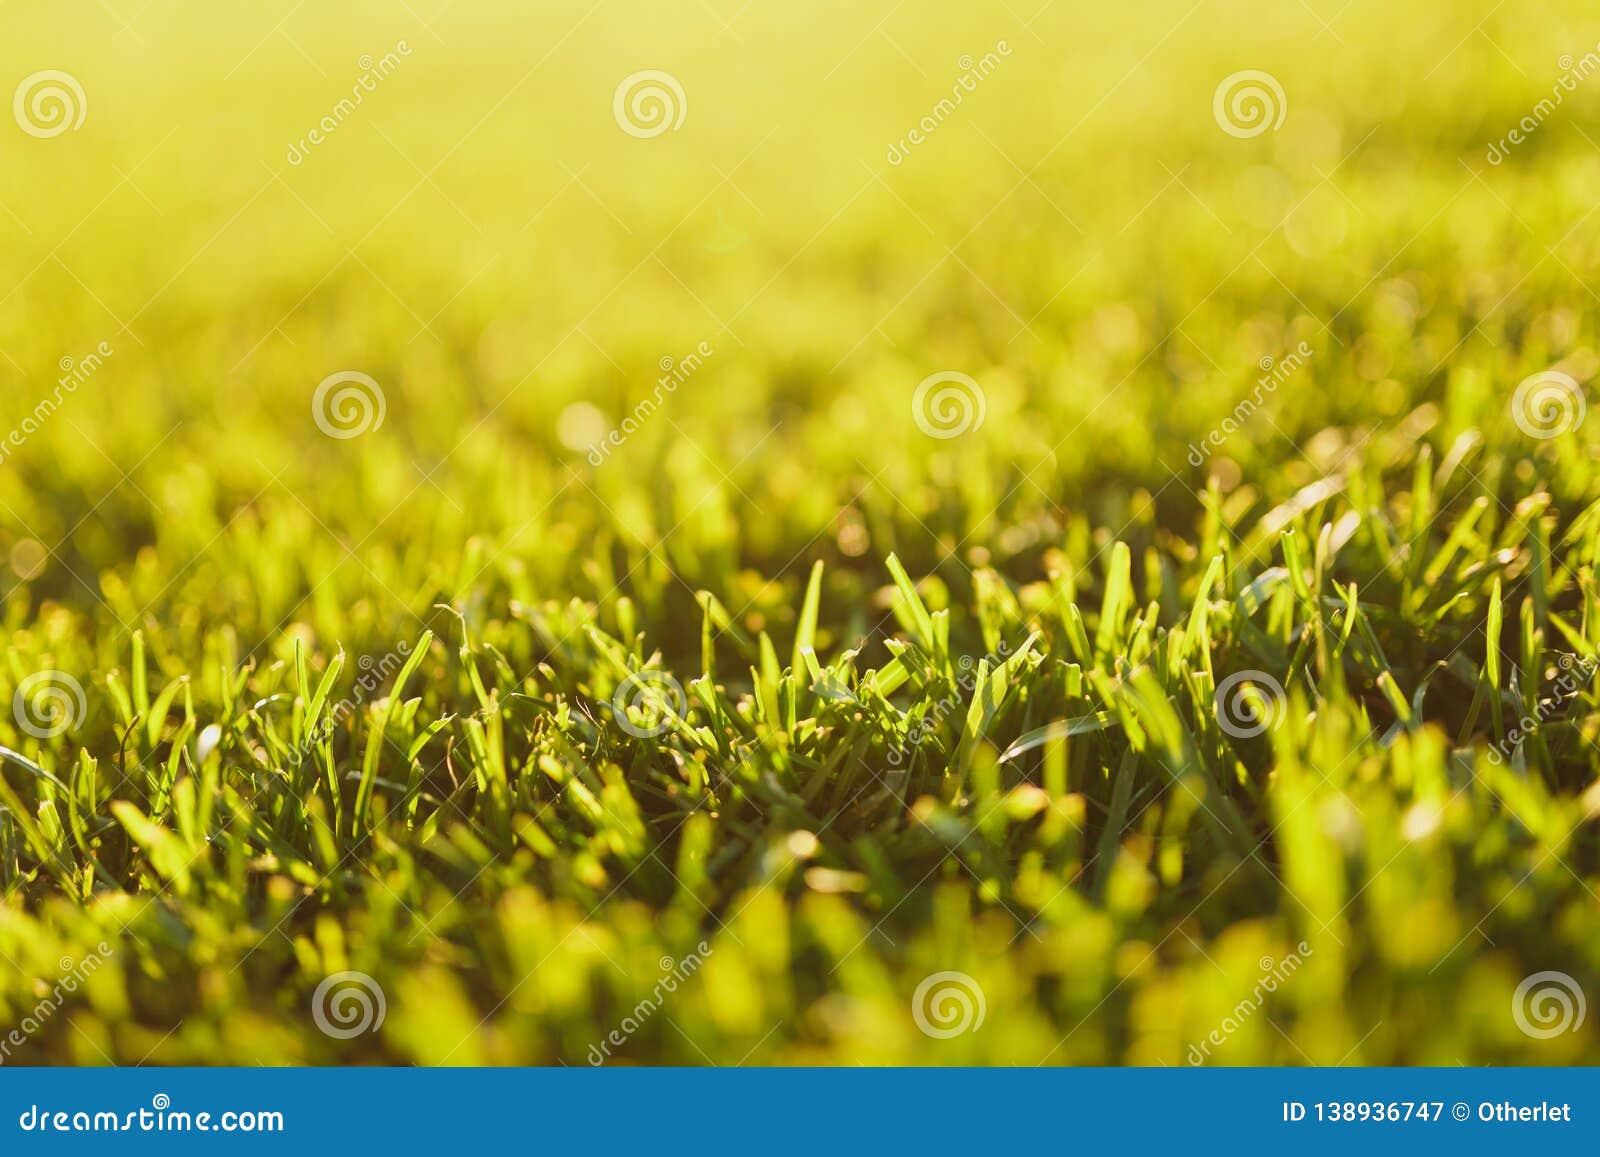 Close Up Vibrant Spring Green Fresh Golf Grass, Sunshine Lawn. Nature